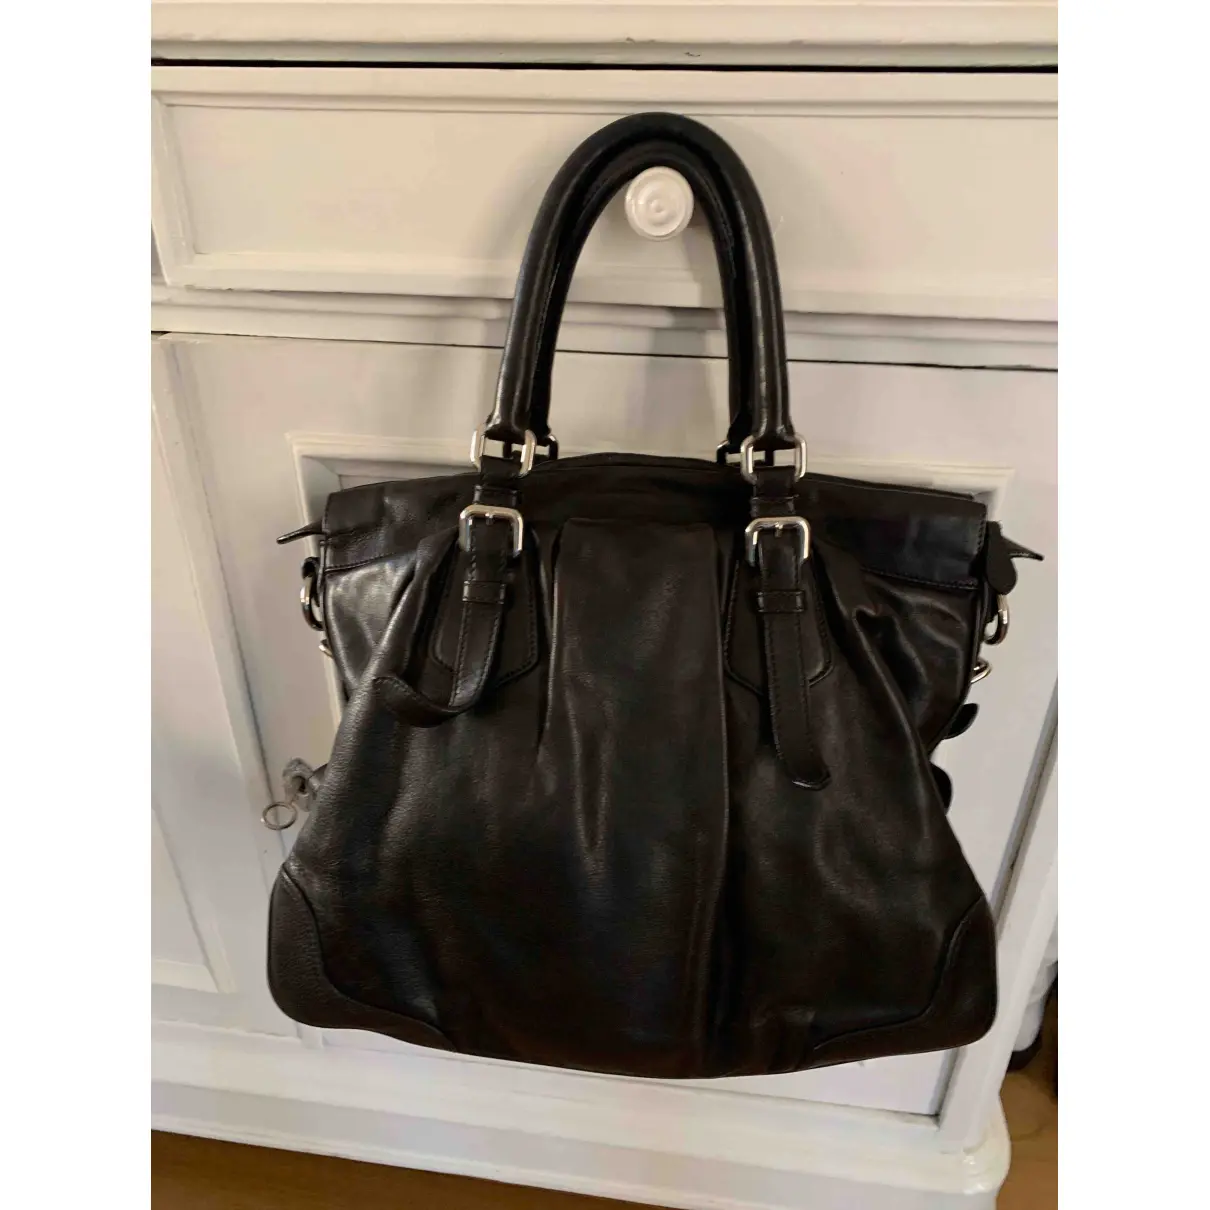 Buy Prada Bibliothèque leather handbag online